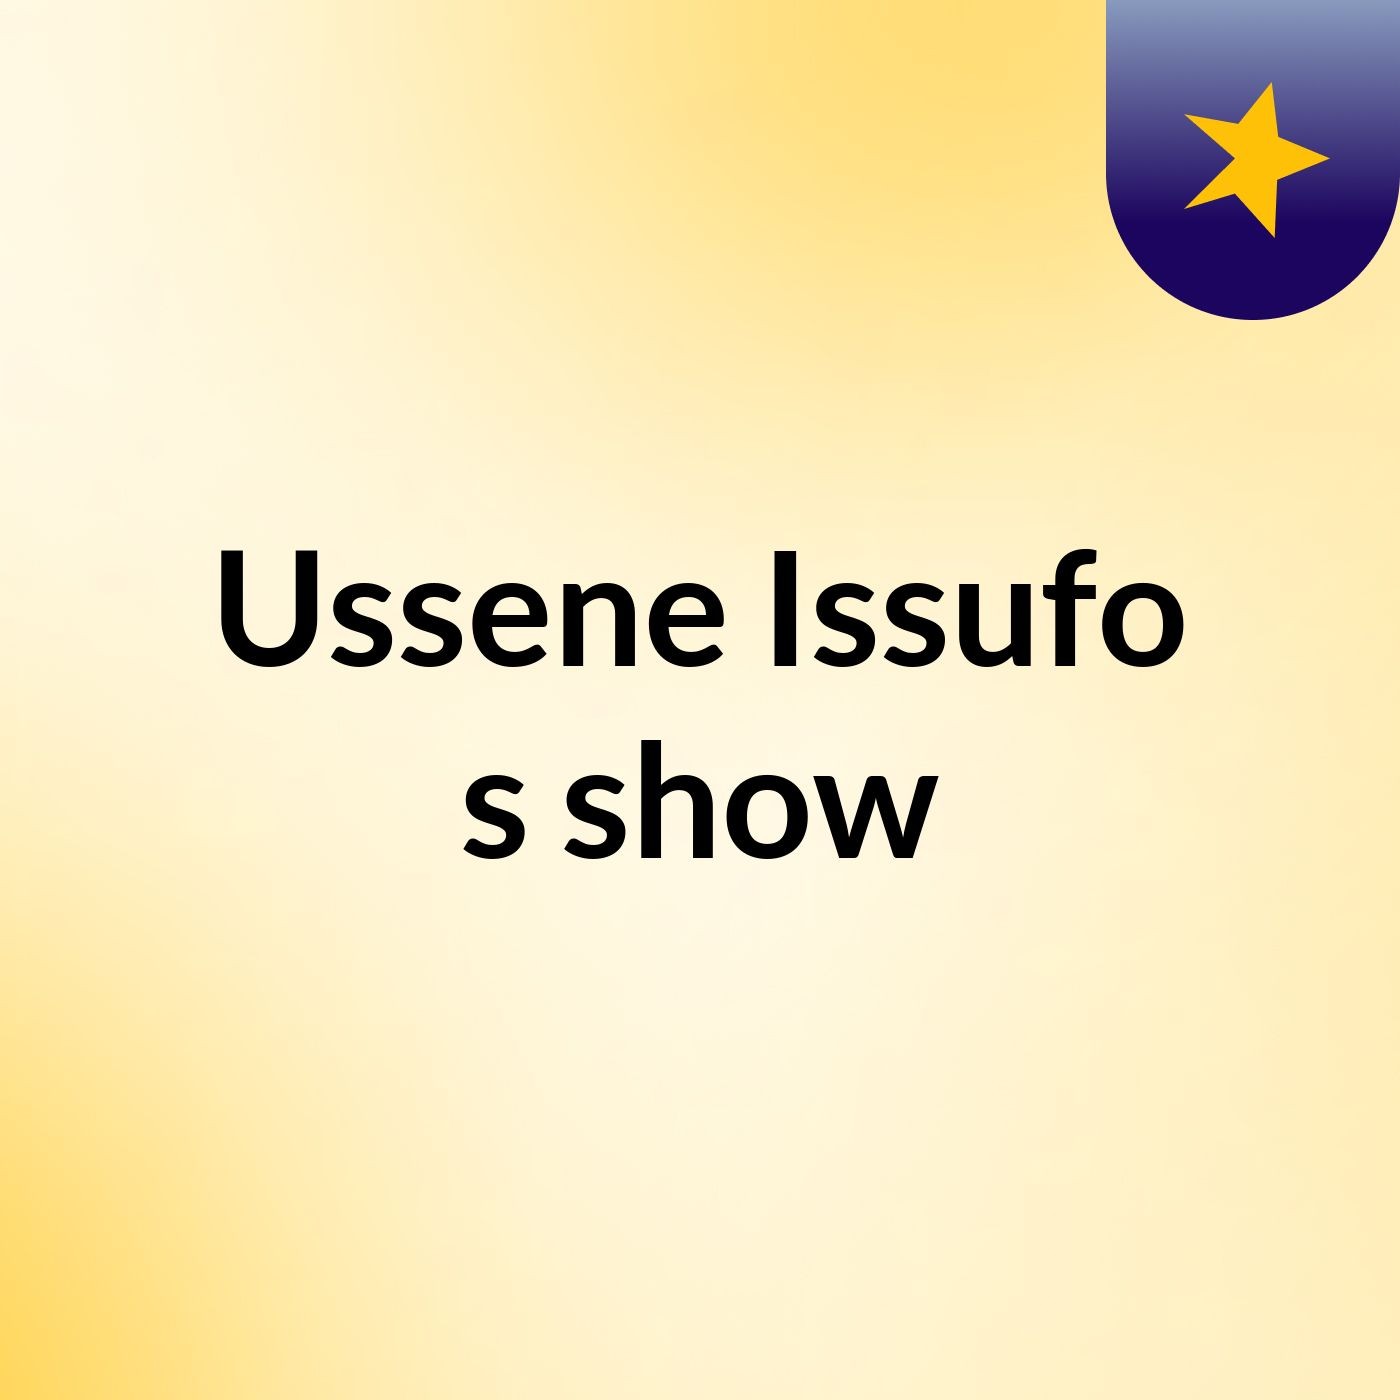 Ussene Issufo's show